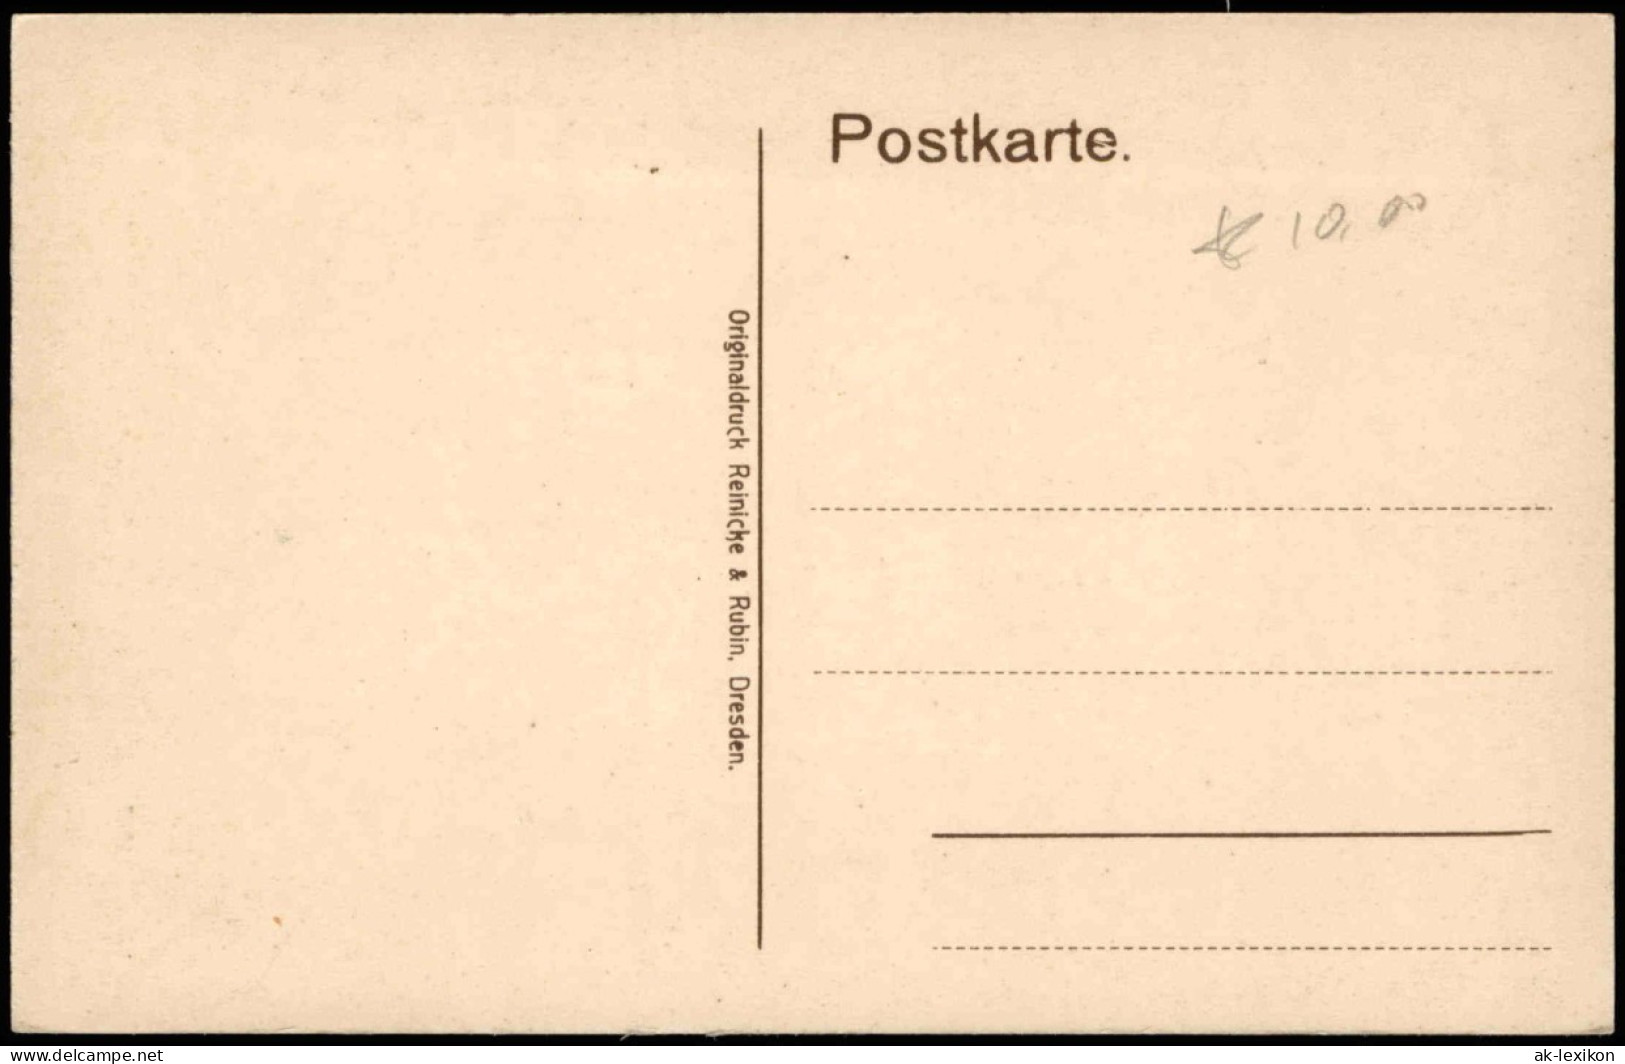 Postcard Eger Cheb Romanische Kapelle In Der Kaiserburg 1910 - Czech Republic